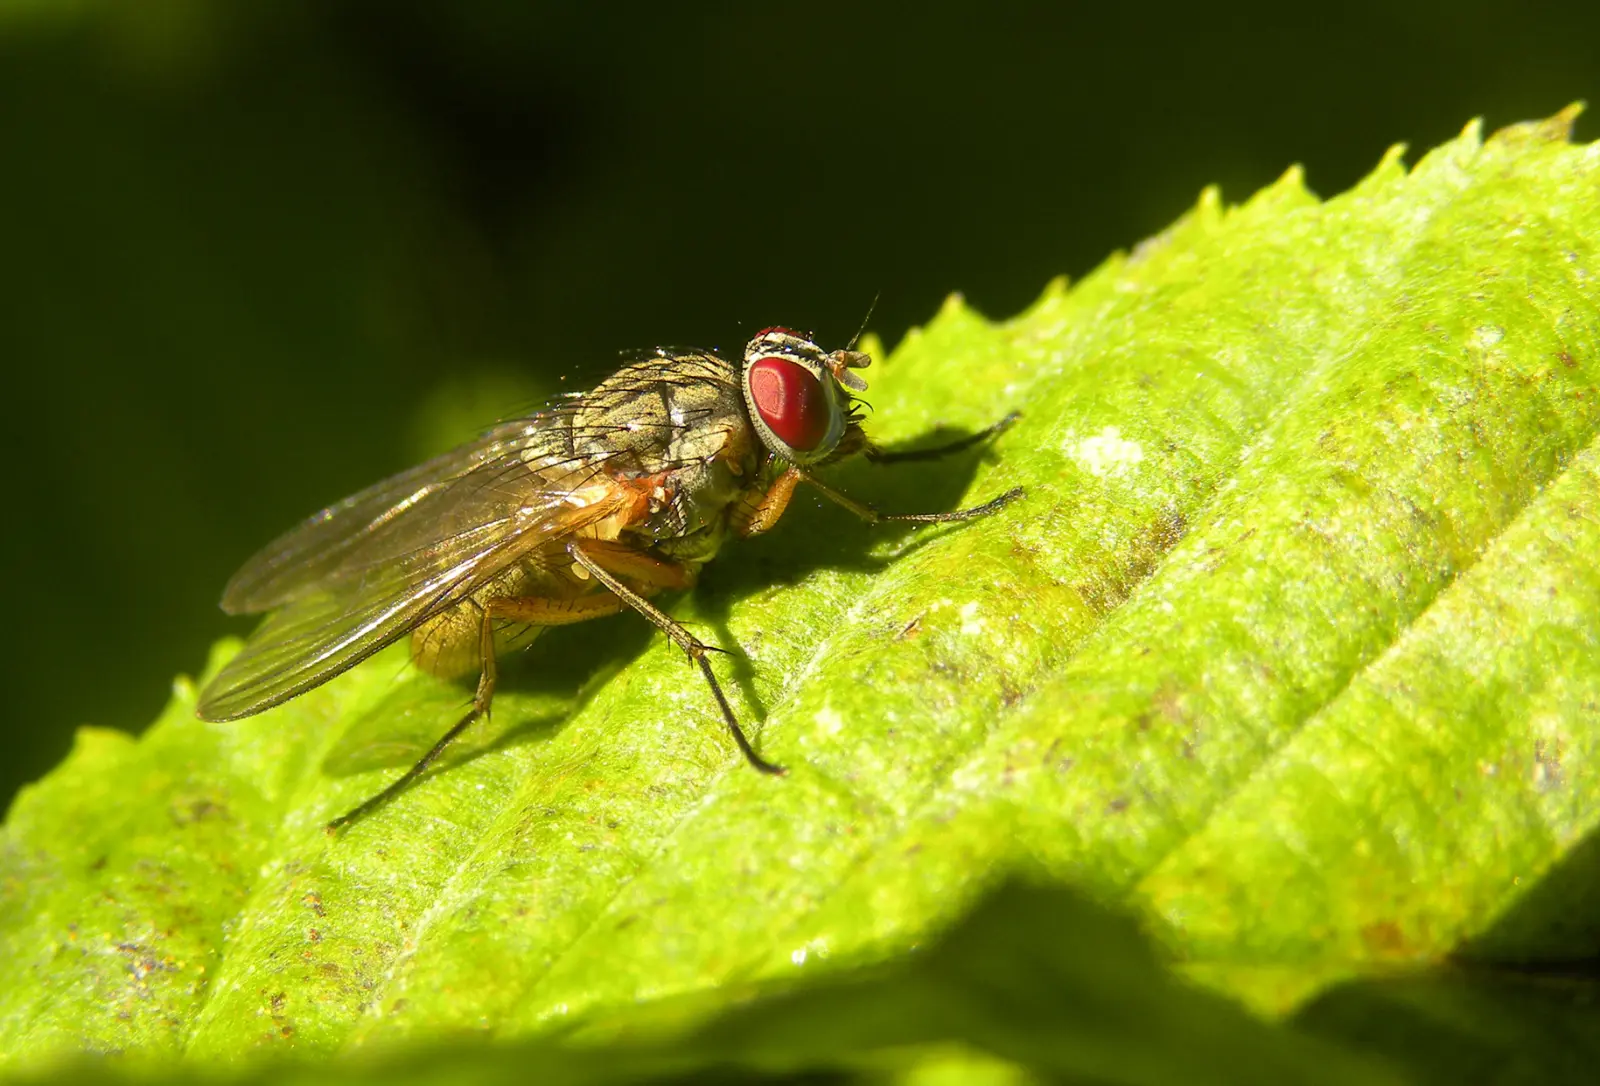 A fly sitting on a leaf, bathed in bright sunshine